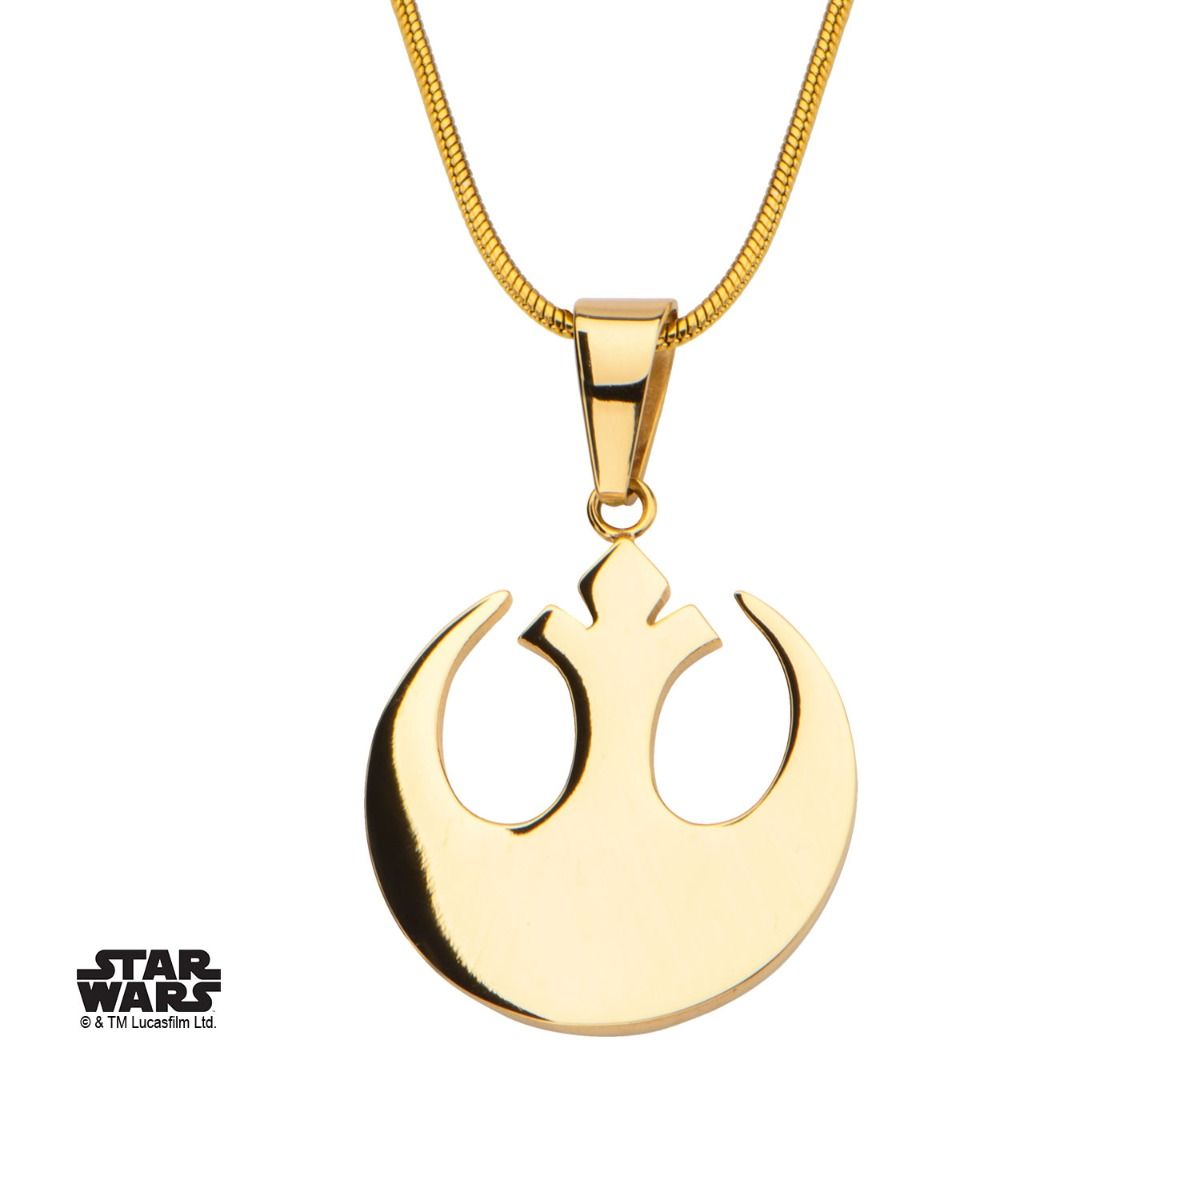 STAR WARS Star Wars Rebels Alliance Symbol Small Pendant Necklace B -Rebel Bod-RebelBod